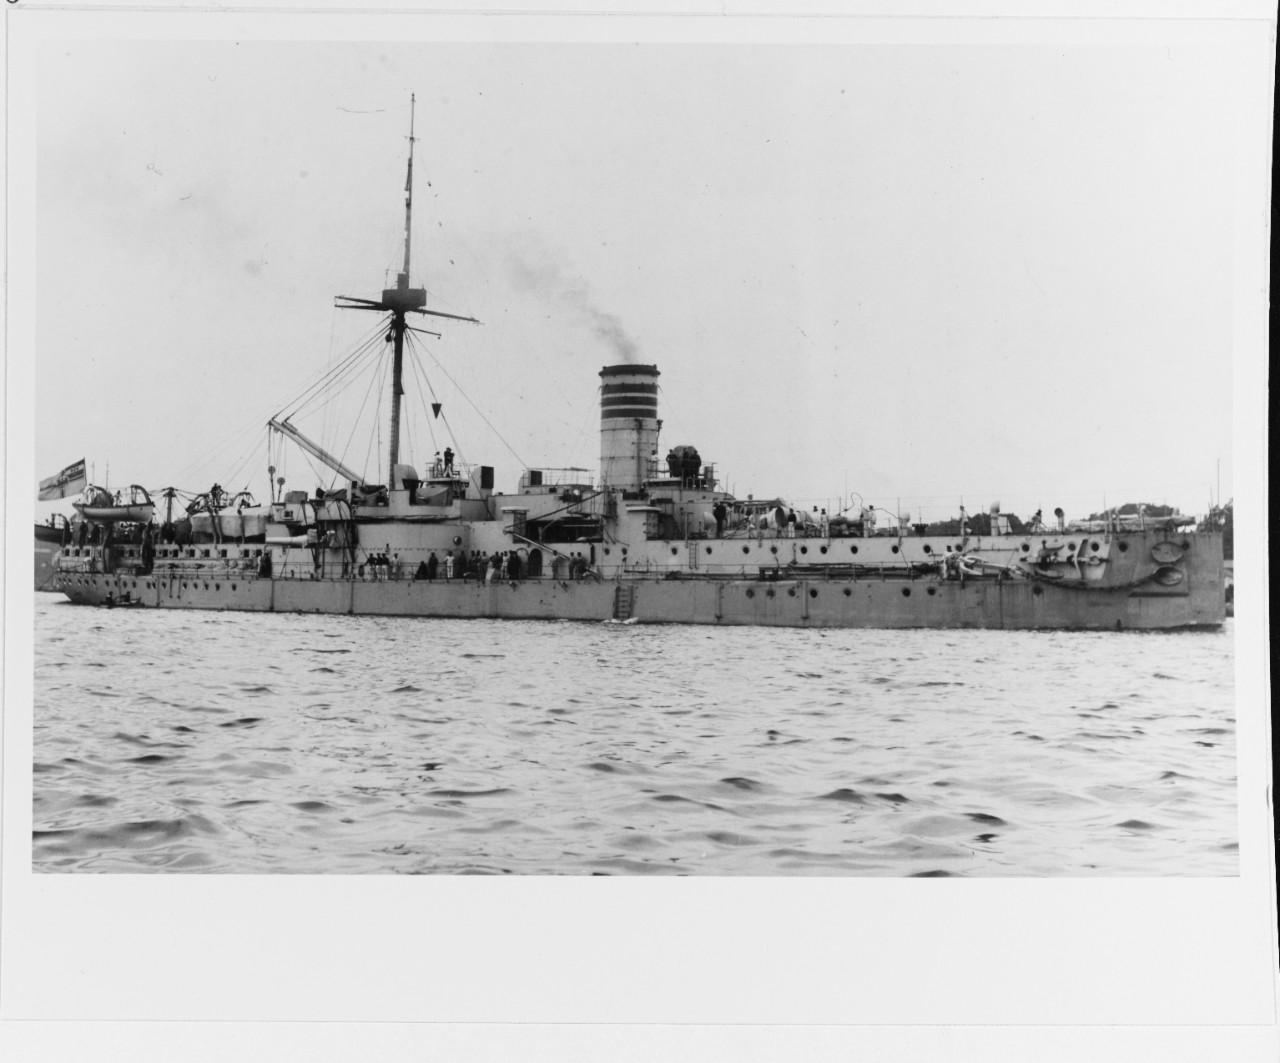 WURTTEMBERG (German battleship, 1878-1920)